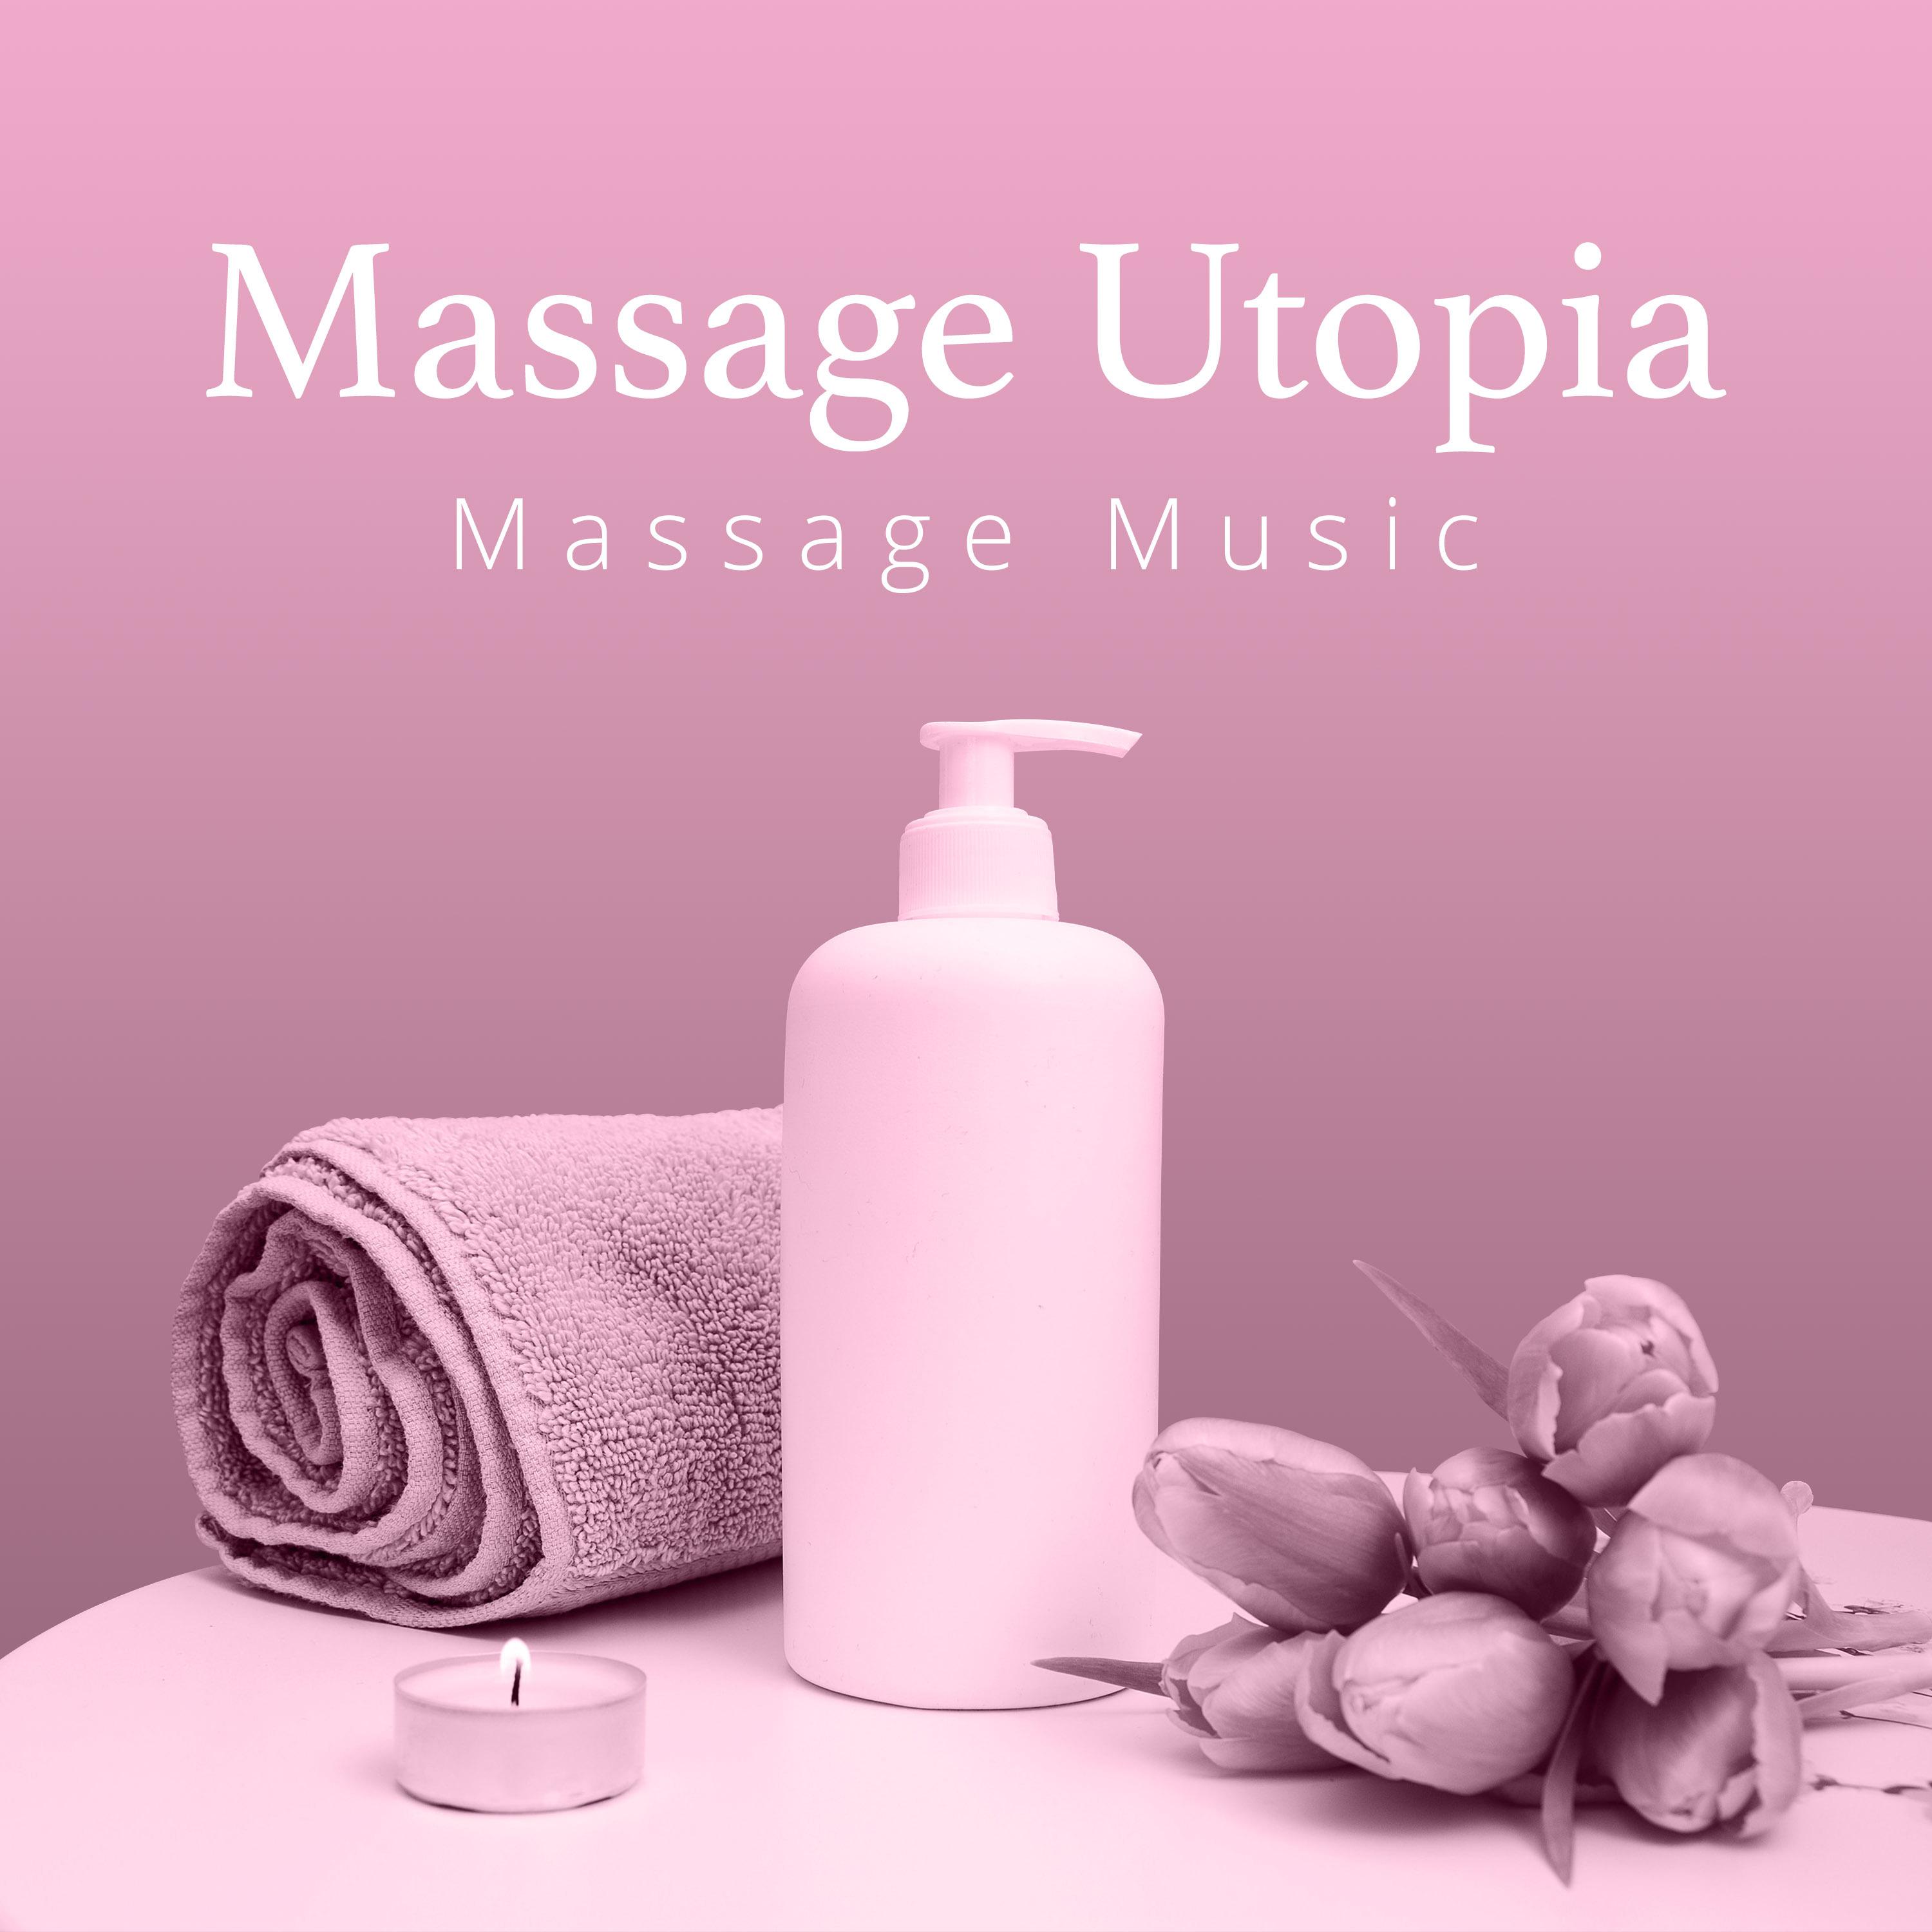 Massage Utopia